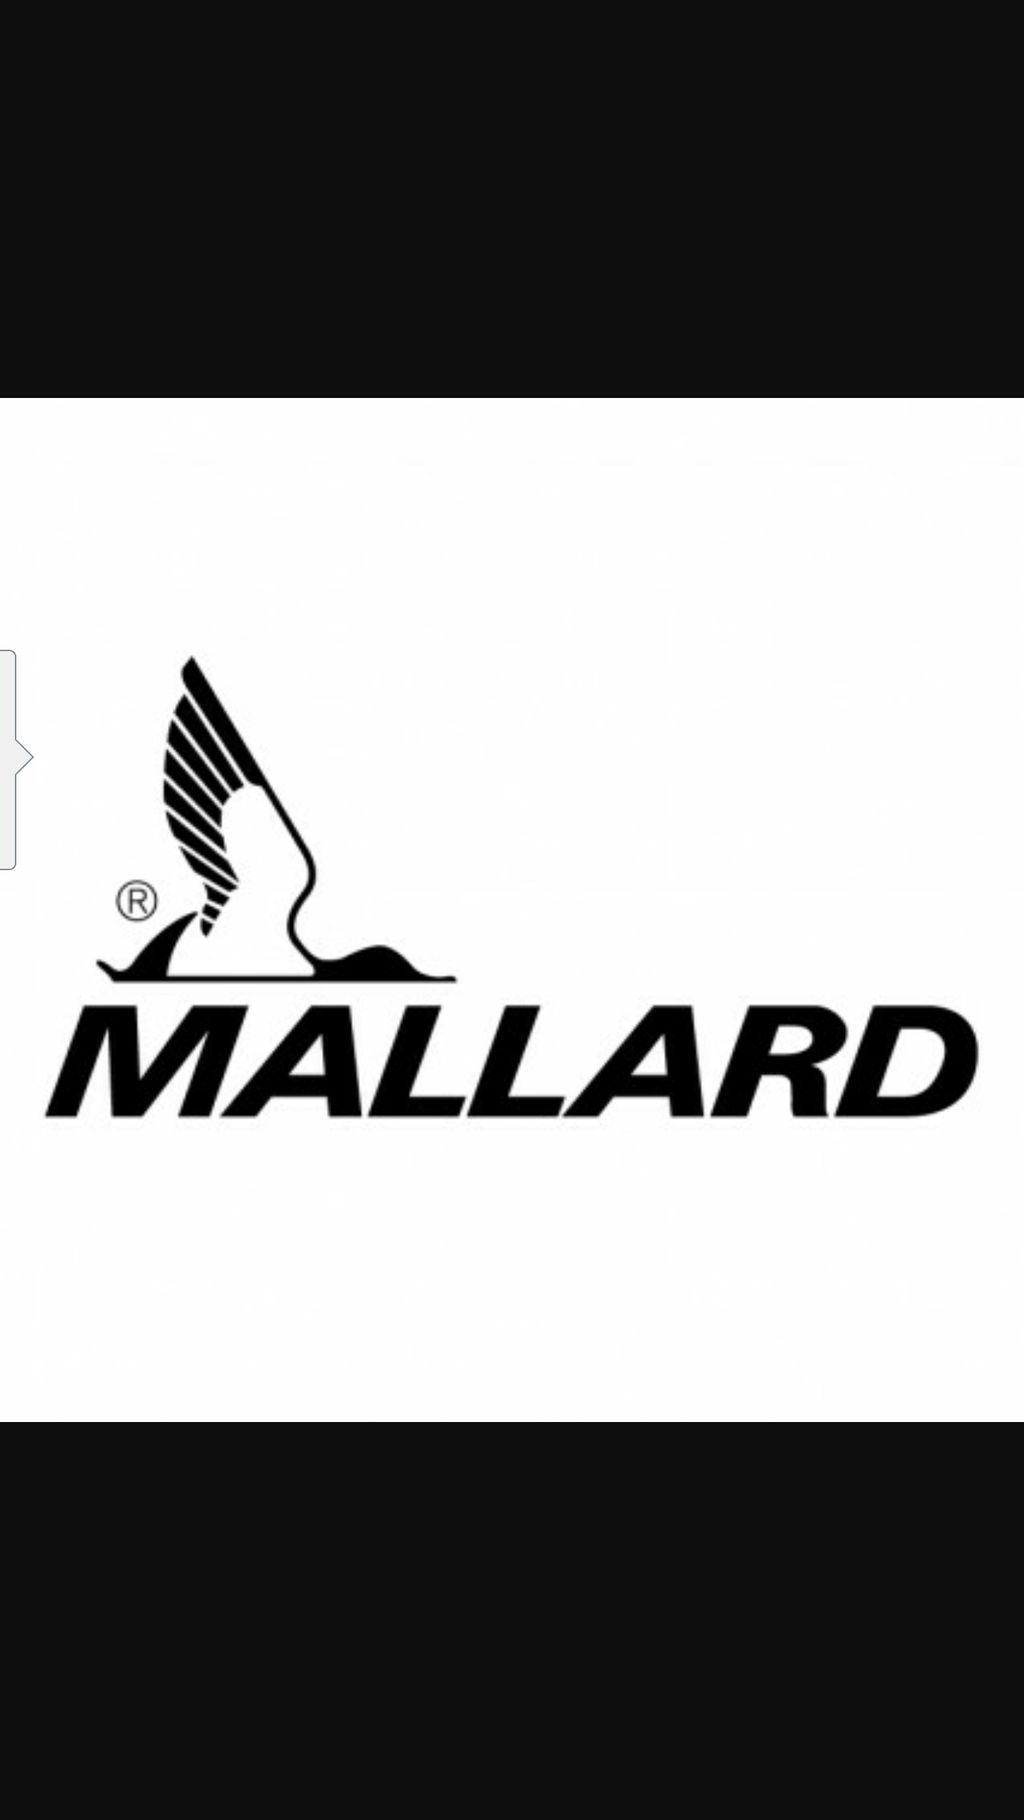 Mallard Home Improvement's